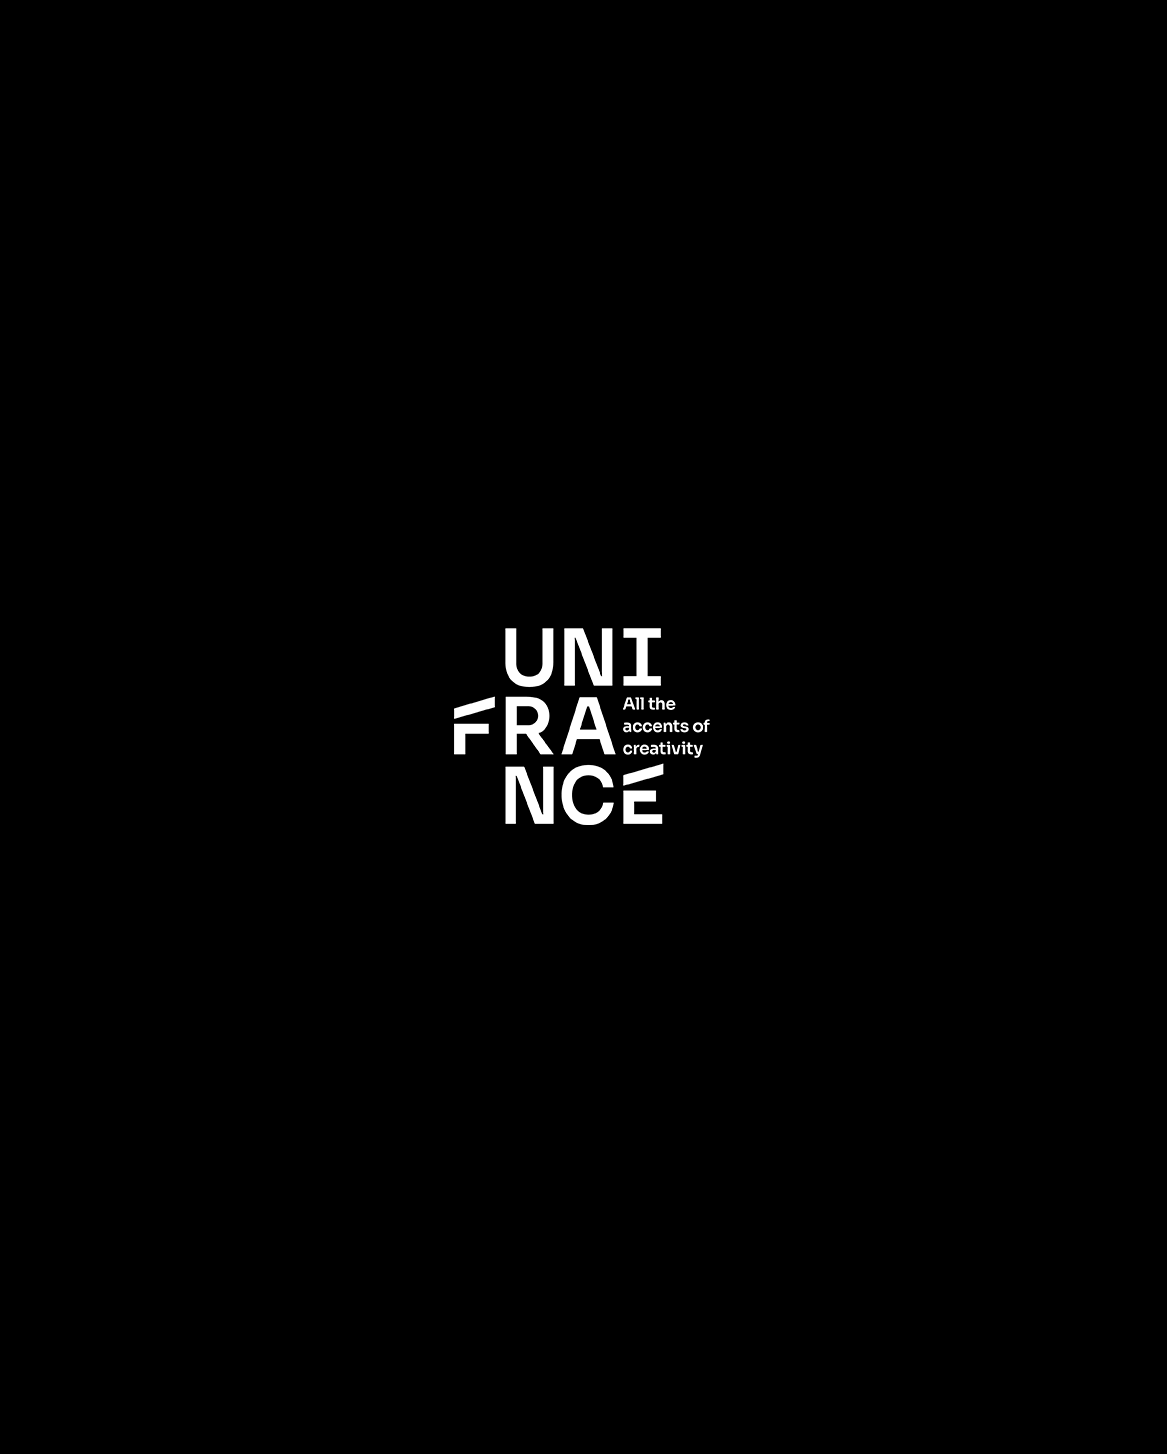 New French Shorts - IFC Center - Nueva York - 2015